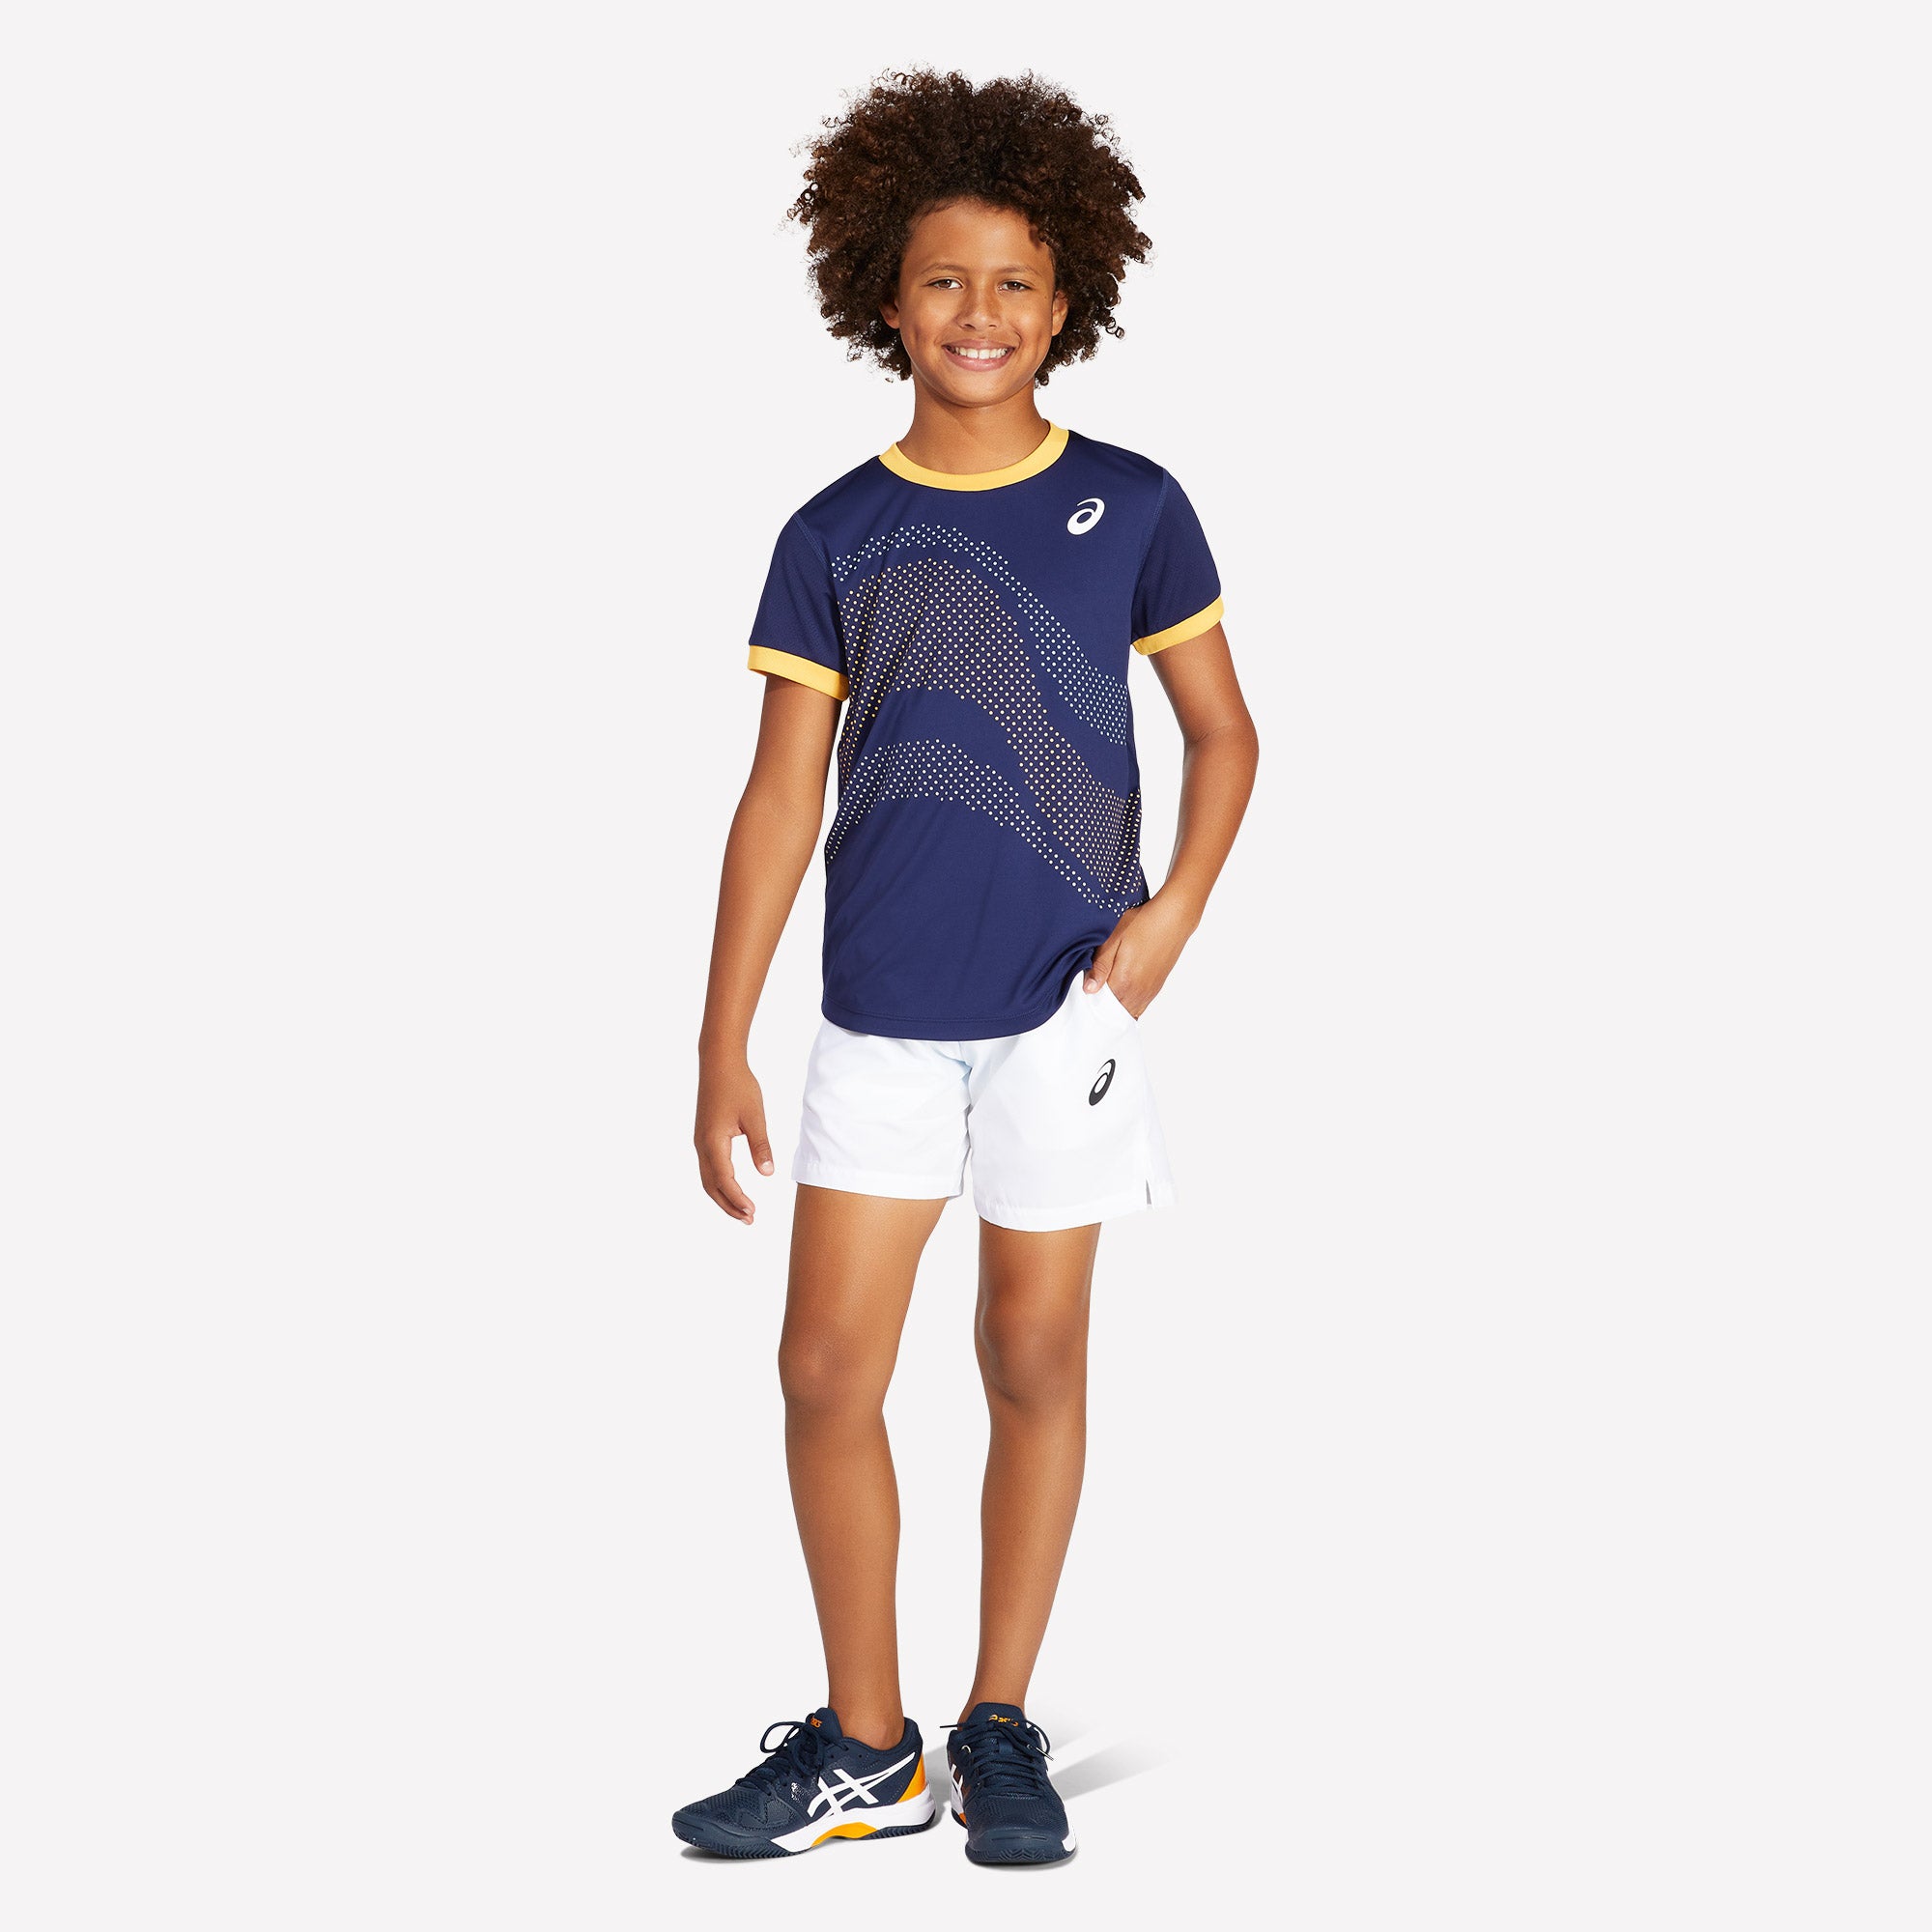 ASICS Match Boys' Graphic Tennis Shirt Blue (3)